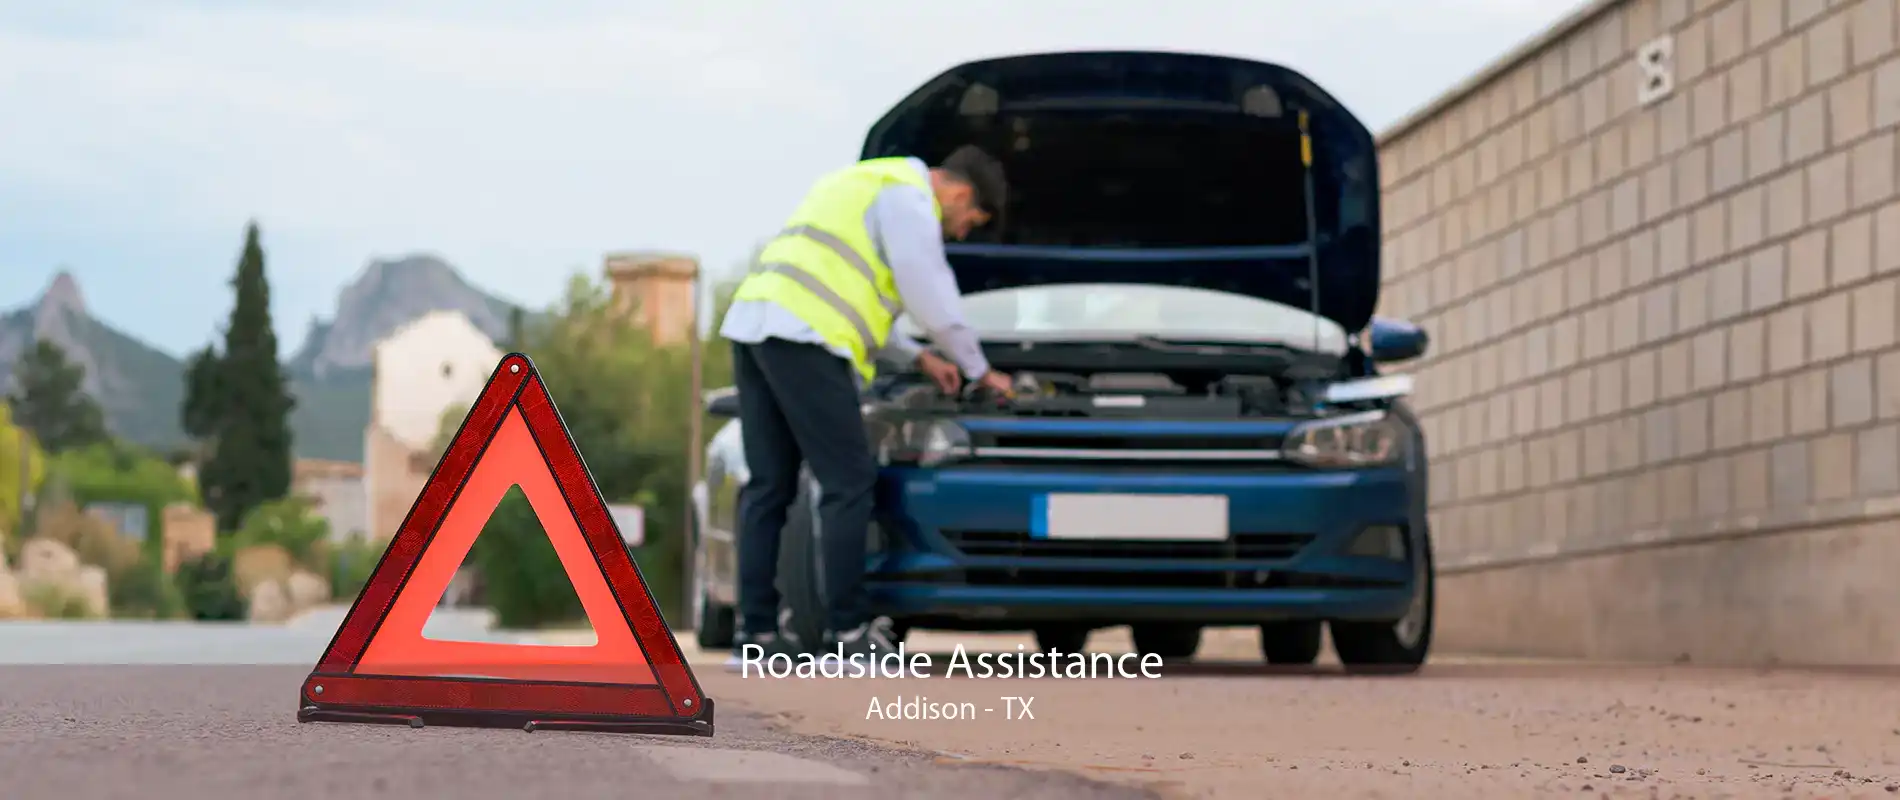 Roadside Assistance Addison - TX